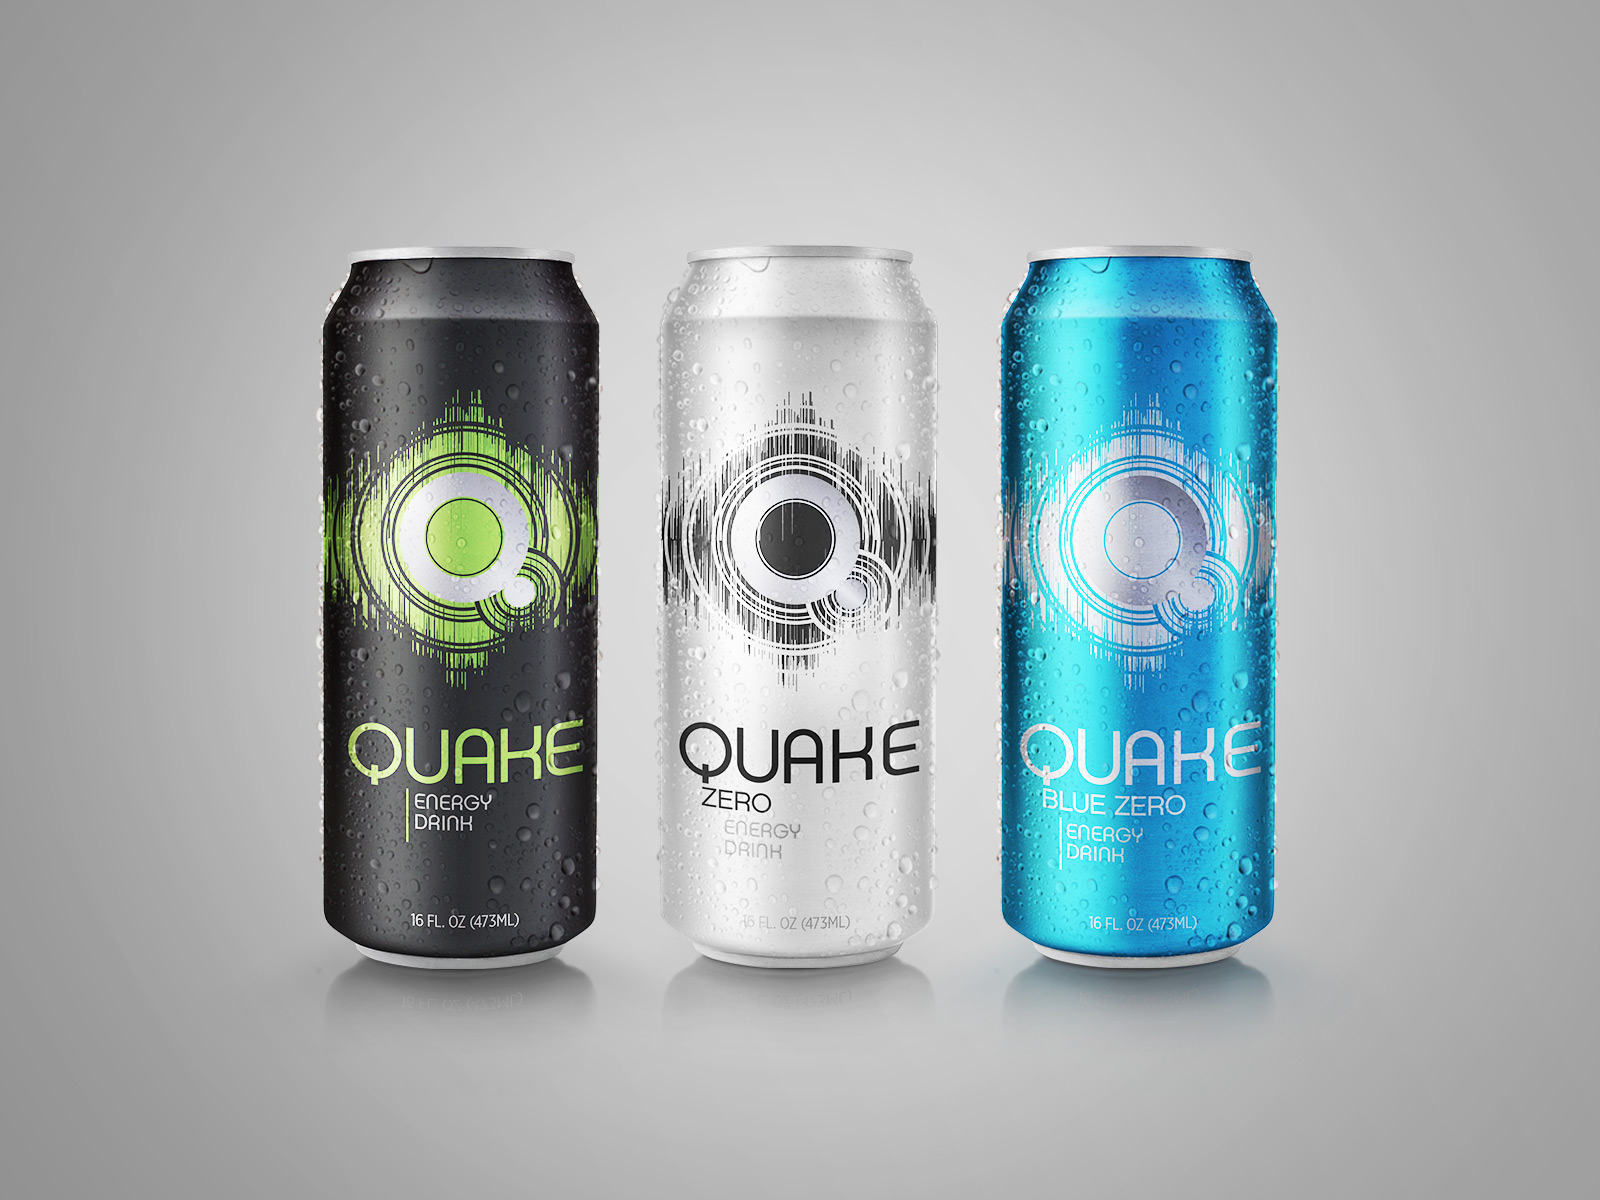 who makes quake energy drink